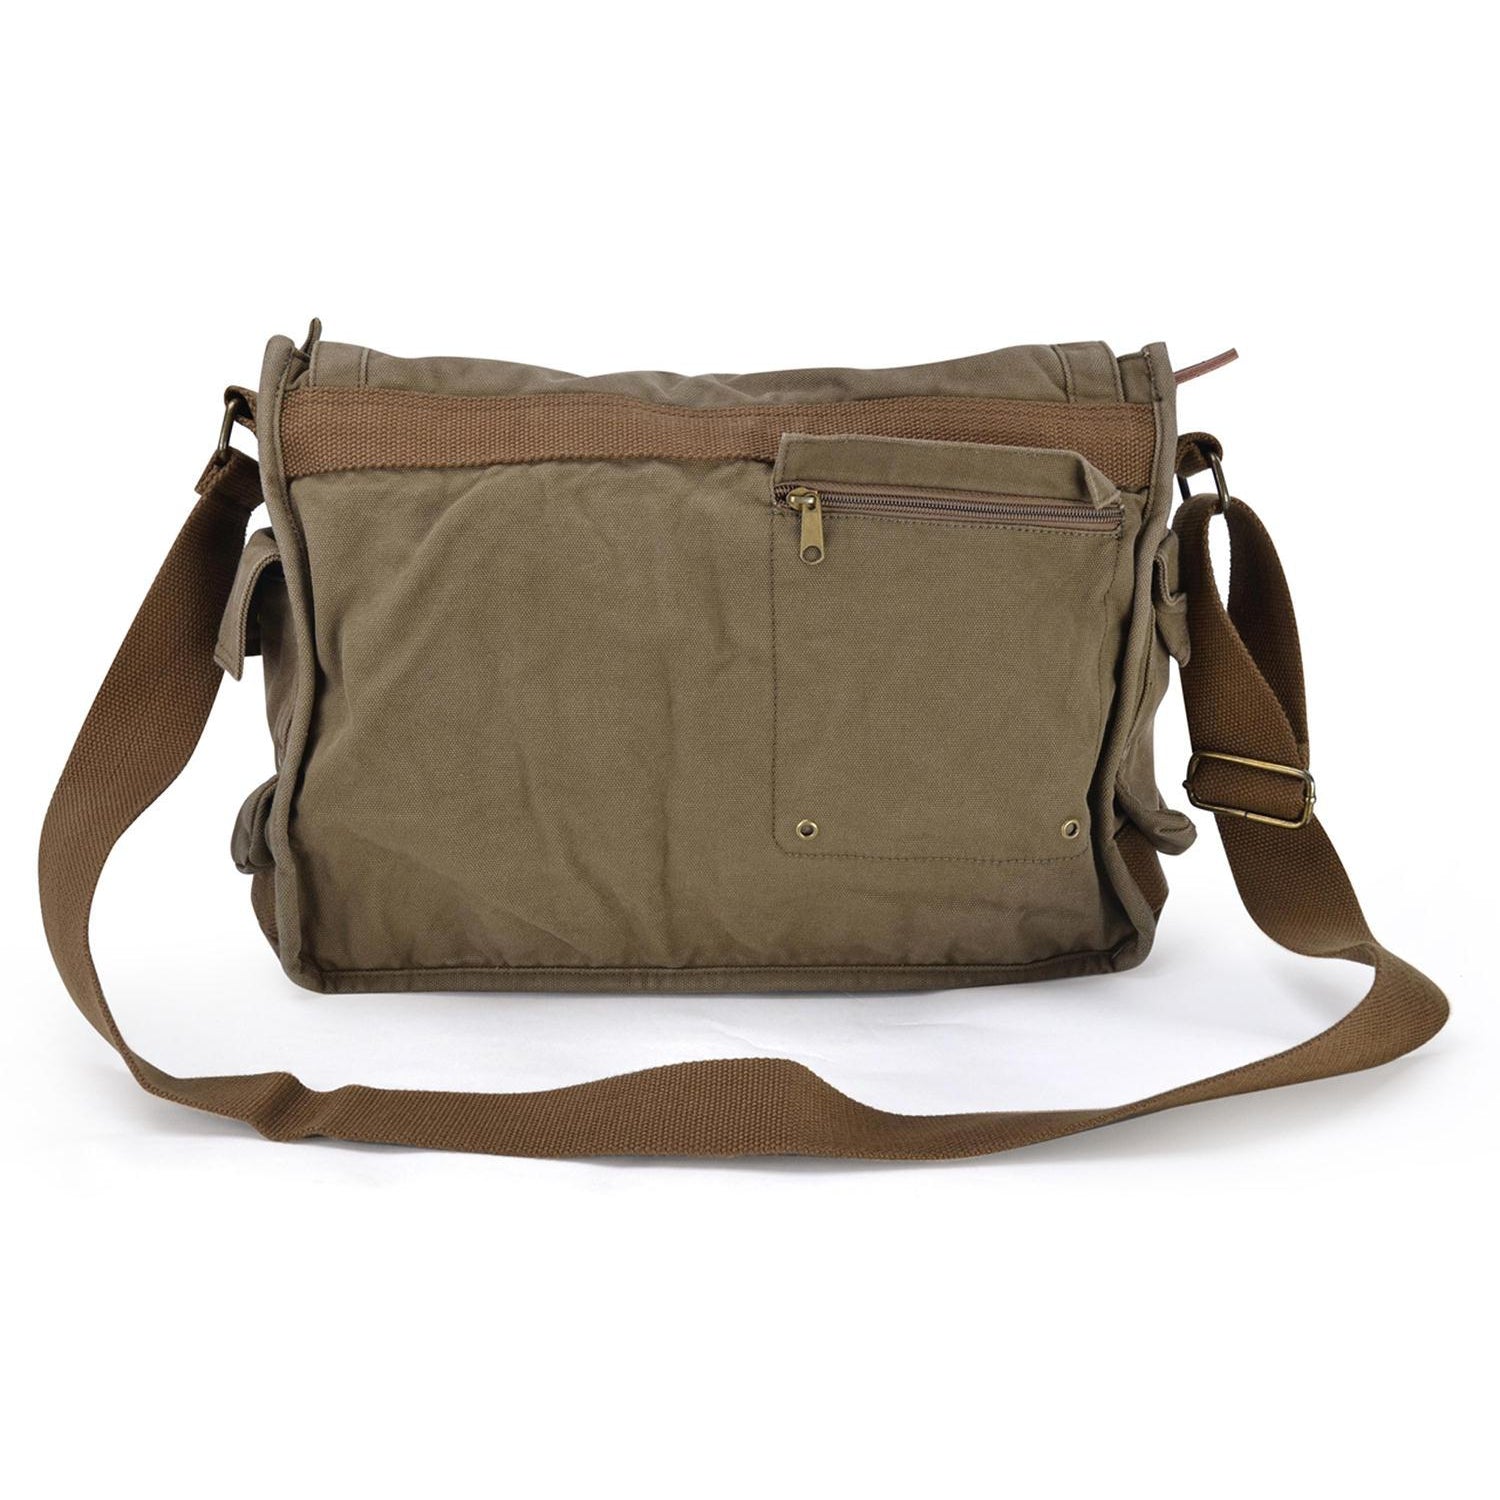 Gootium Canvas Messenger Bag - Vintage Crossbody Shoulder Bag Military  Satchel